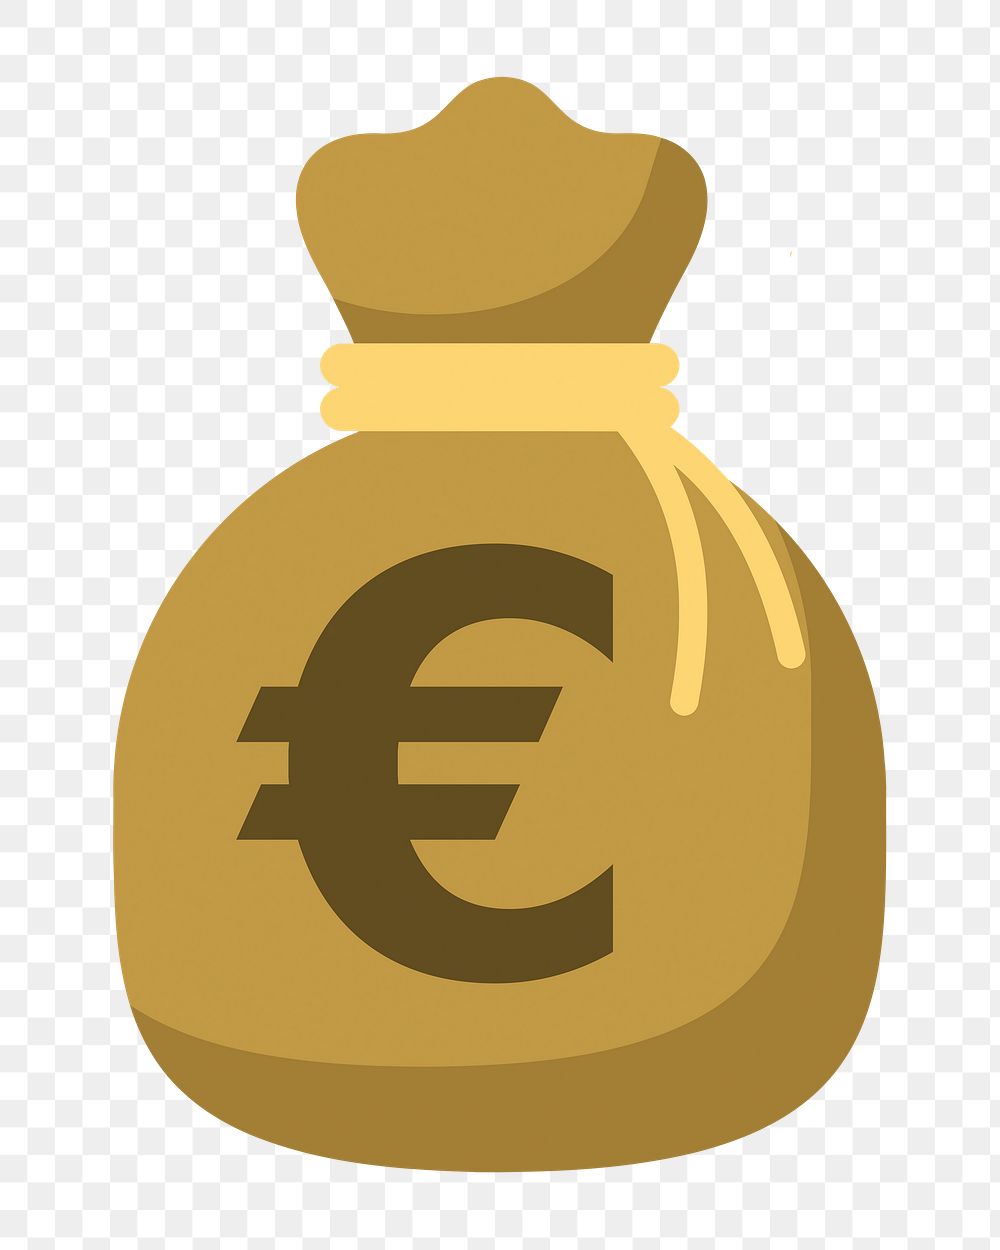 EU Euro currency money bag png illustration, transparent background. Free public domain CC0 image.